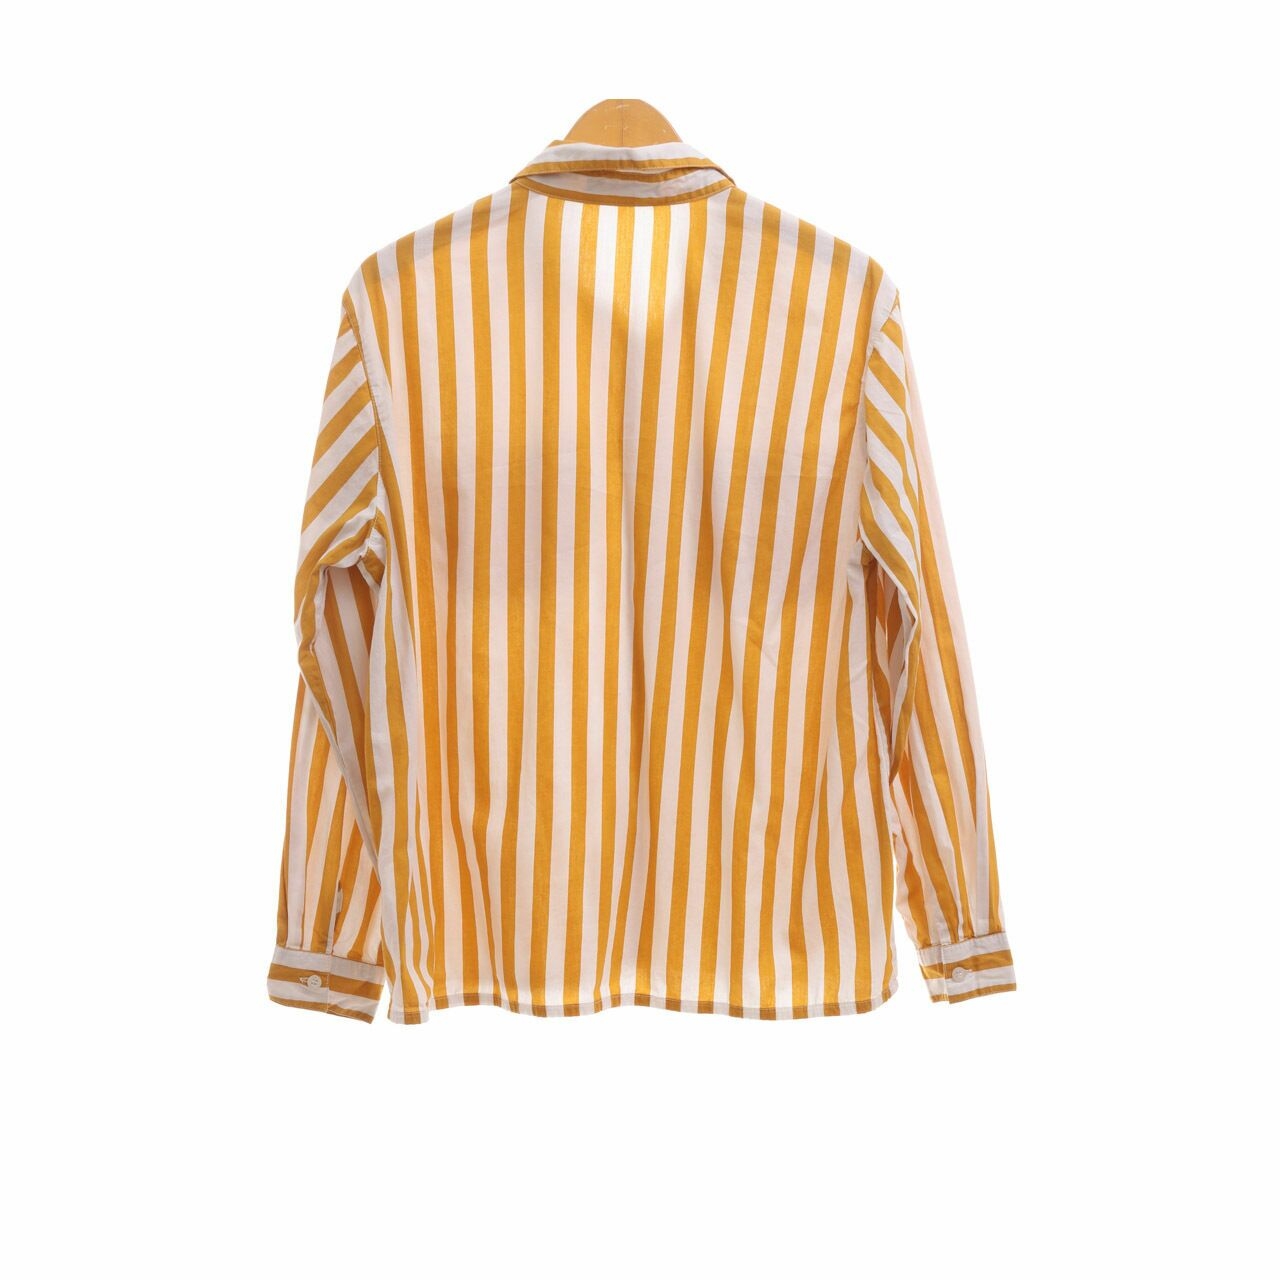 Tarte White & Mustard Striped Shirt